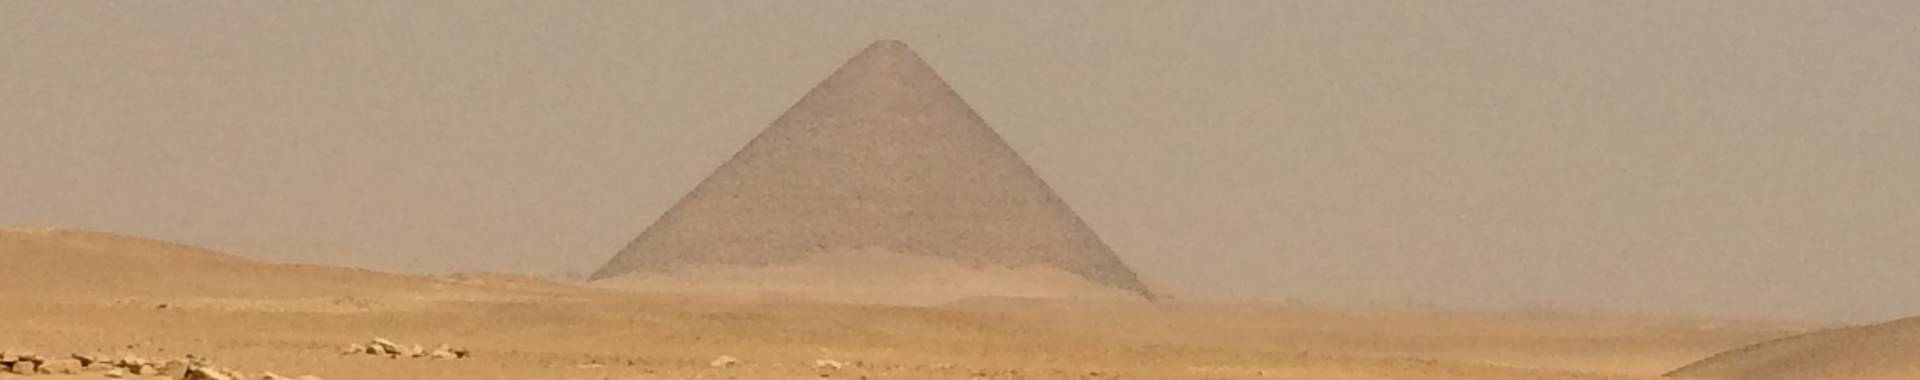 Rode piramide van Dahshur in Caïro